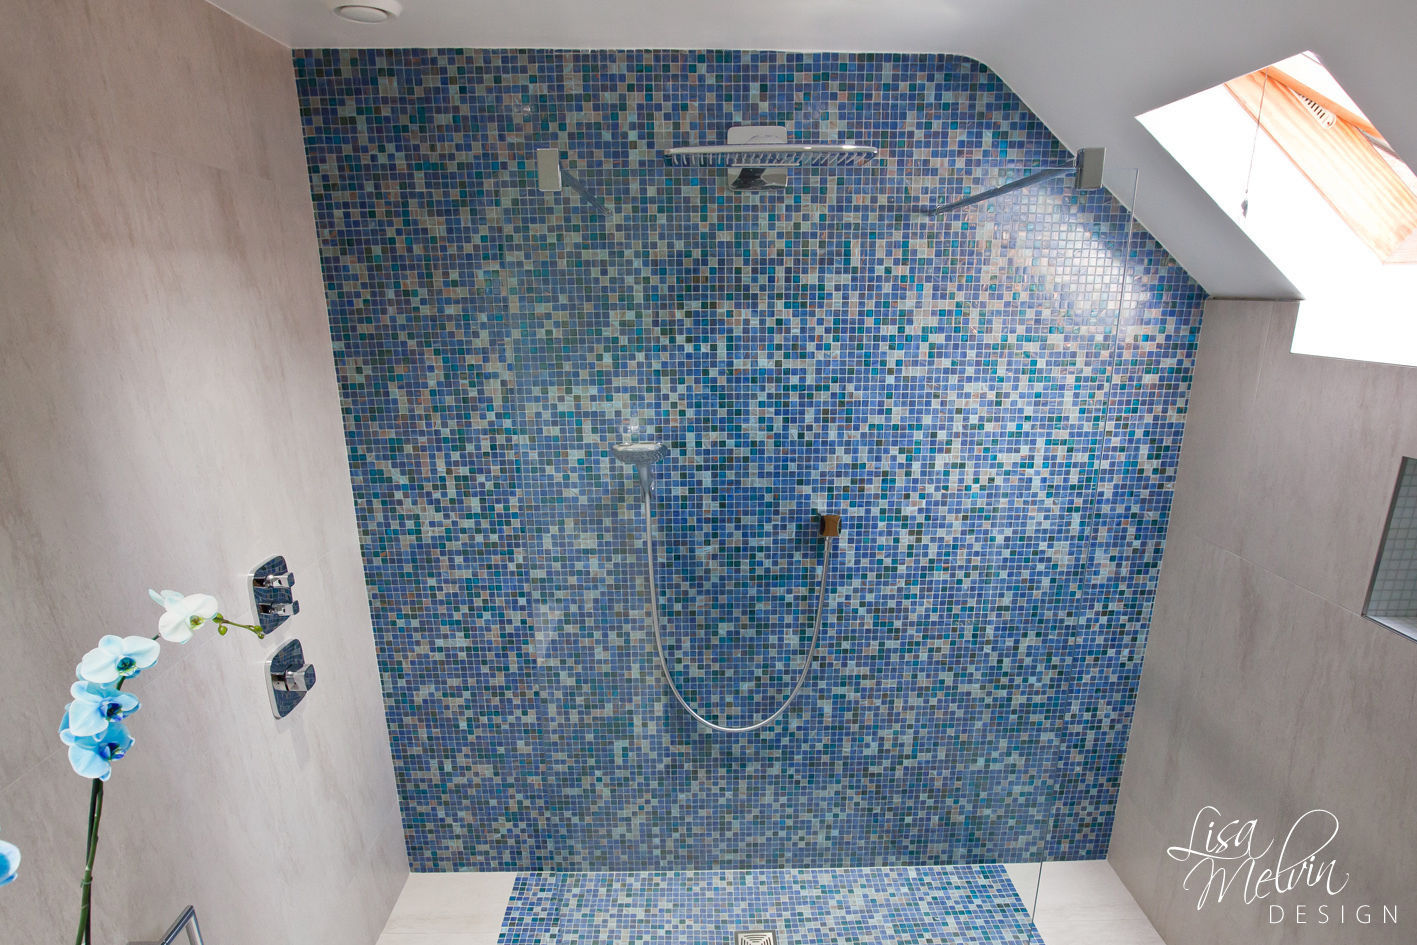 Shower & Mosaic Wall Lisa Melvin Design حمام